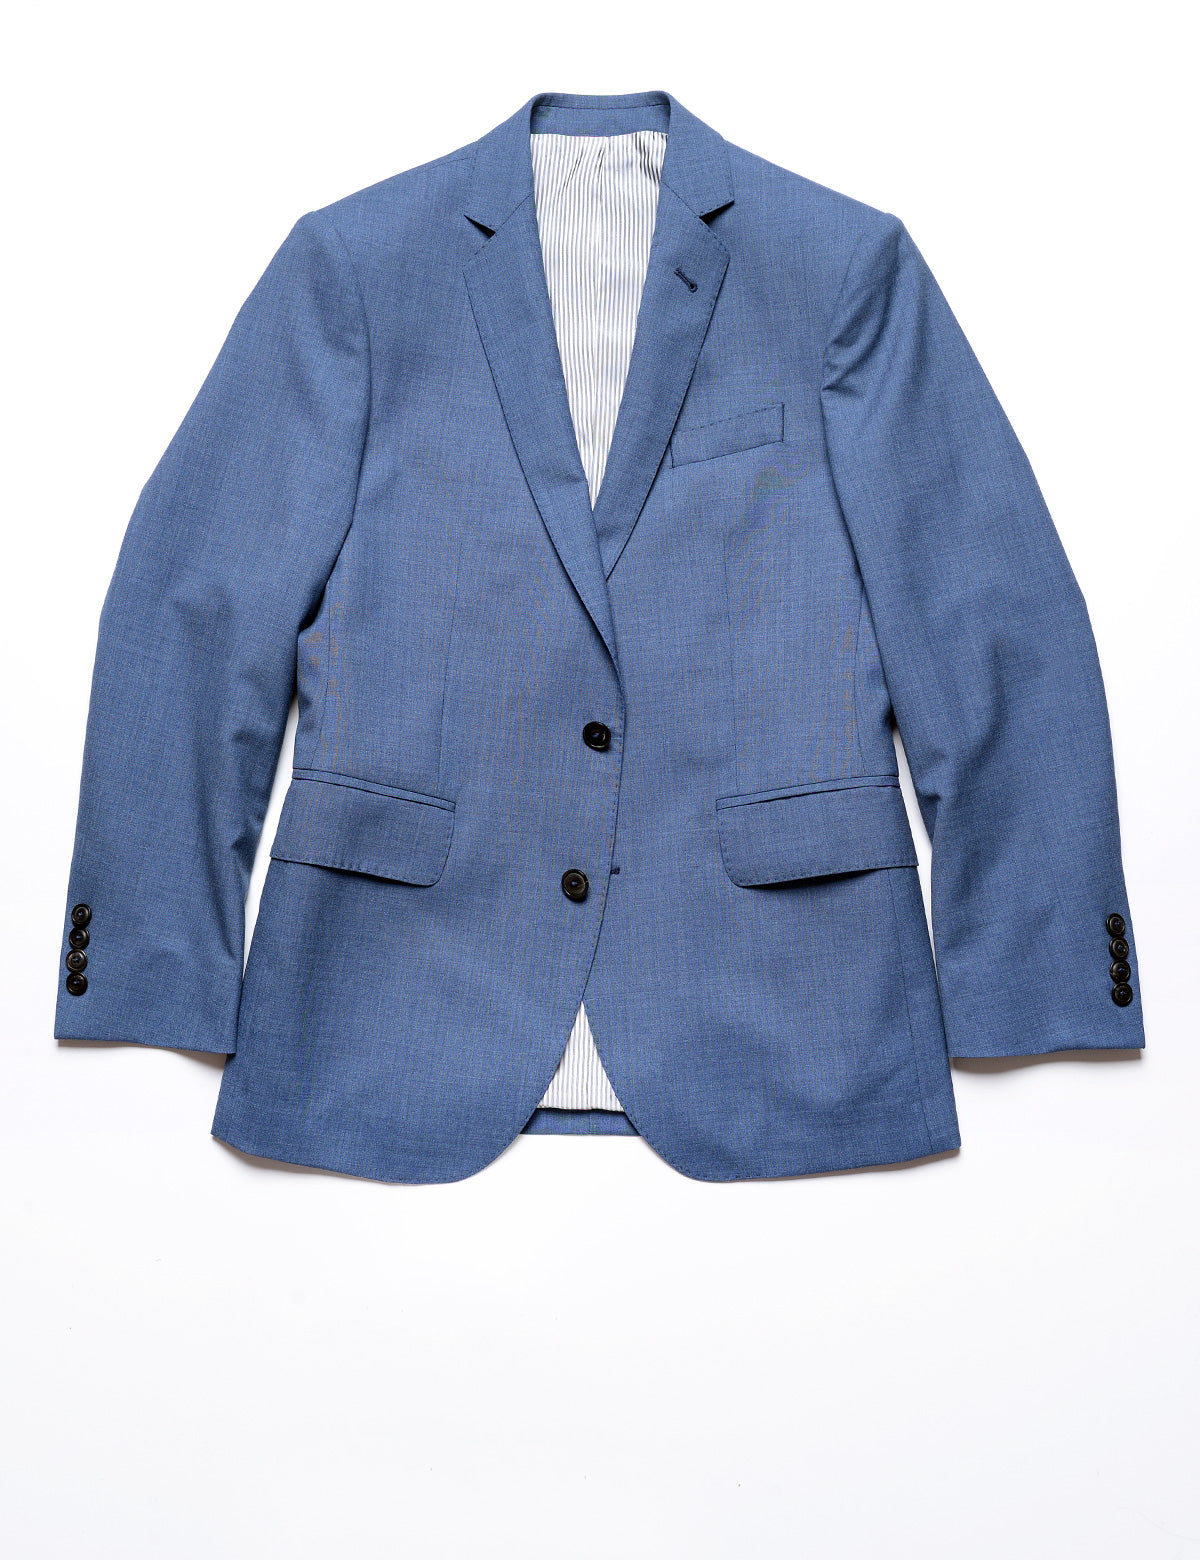 Brooklyn Tailors BKT50 Tailored Jacket in Heathered Wool - San Marino Blue full length flat shot